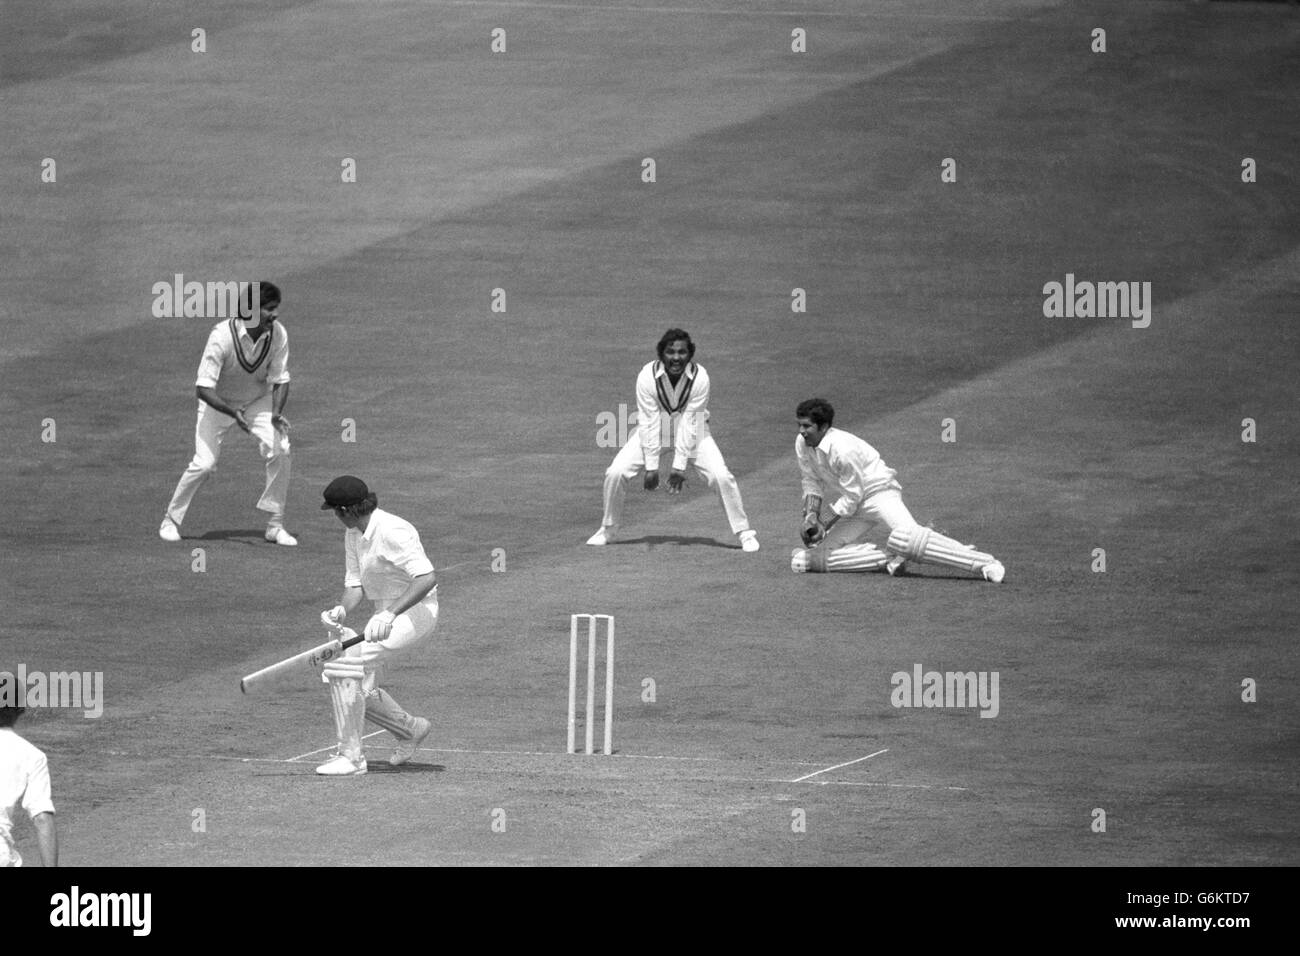 Cricket - Prudential Cup - Australia v Pakistan - Headingley, Leeds. Rick McCosker is caught behind wicket by Wasim Bari off Malik bowling. Stock Photo